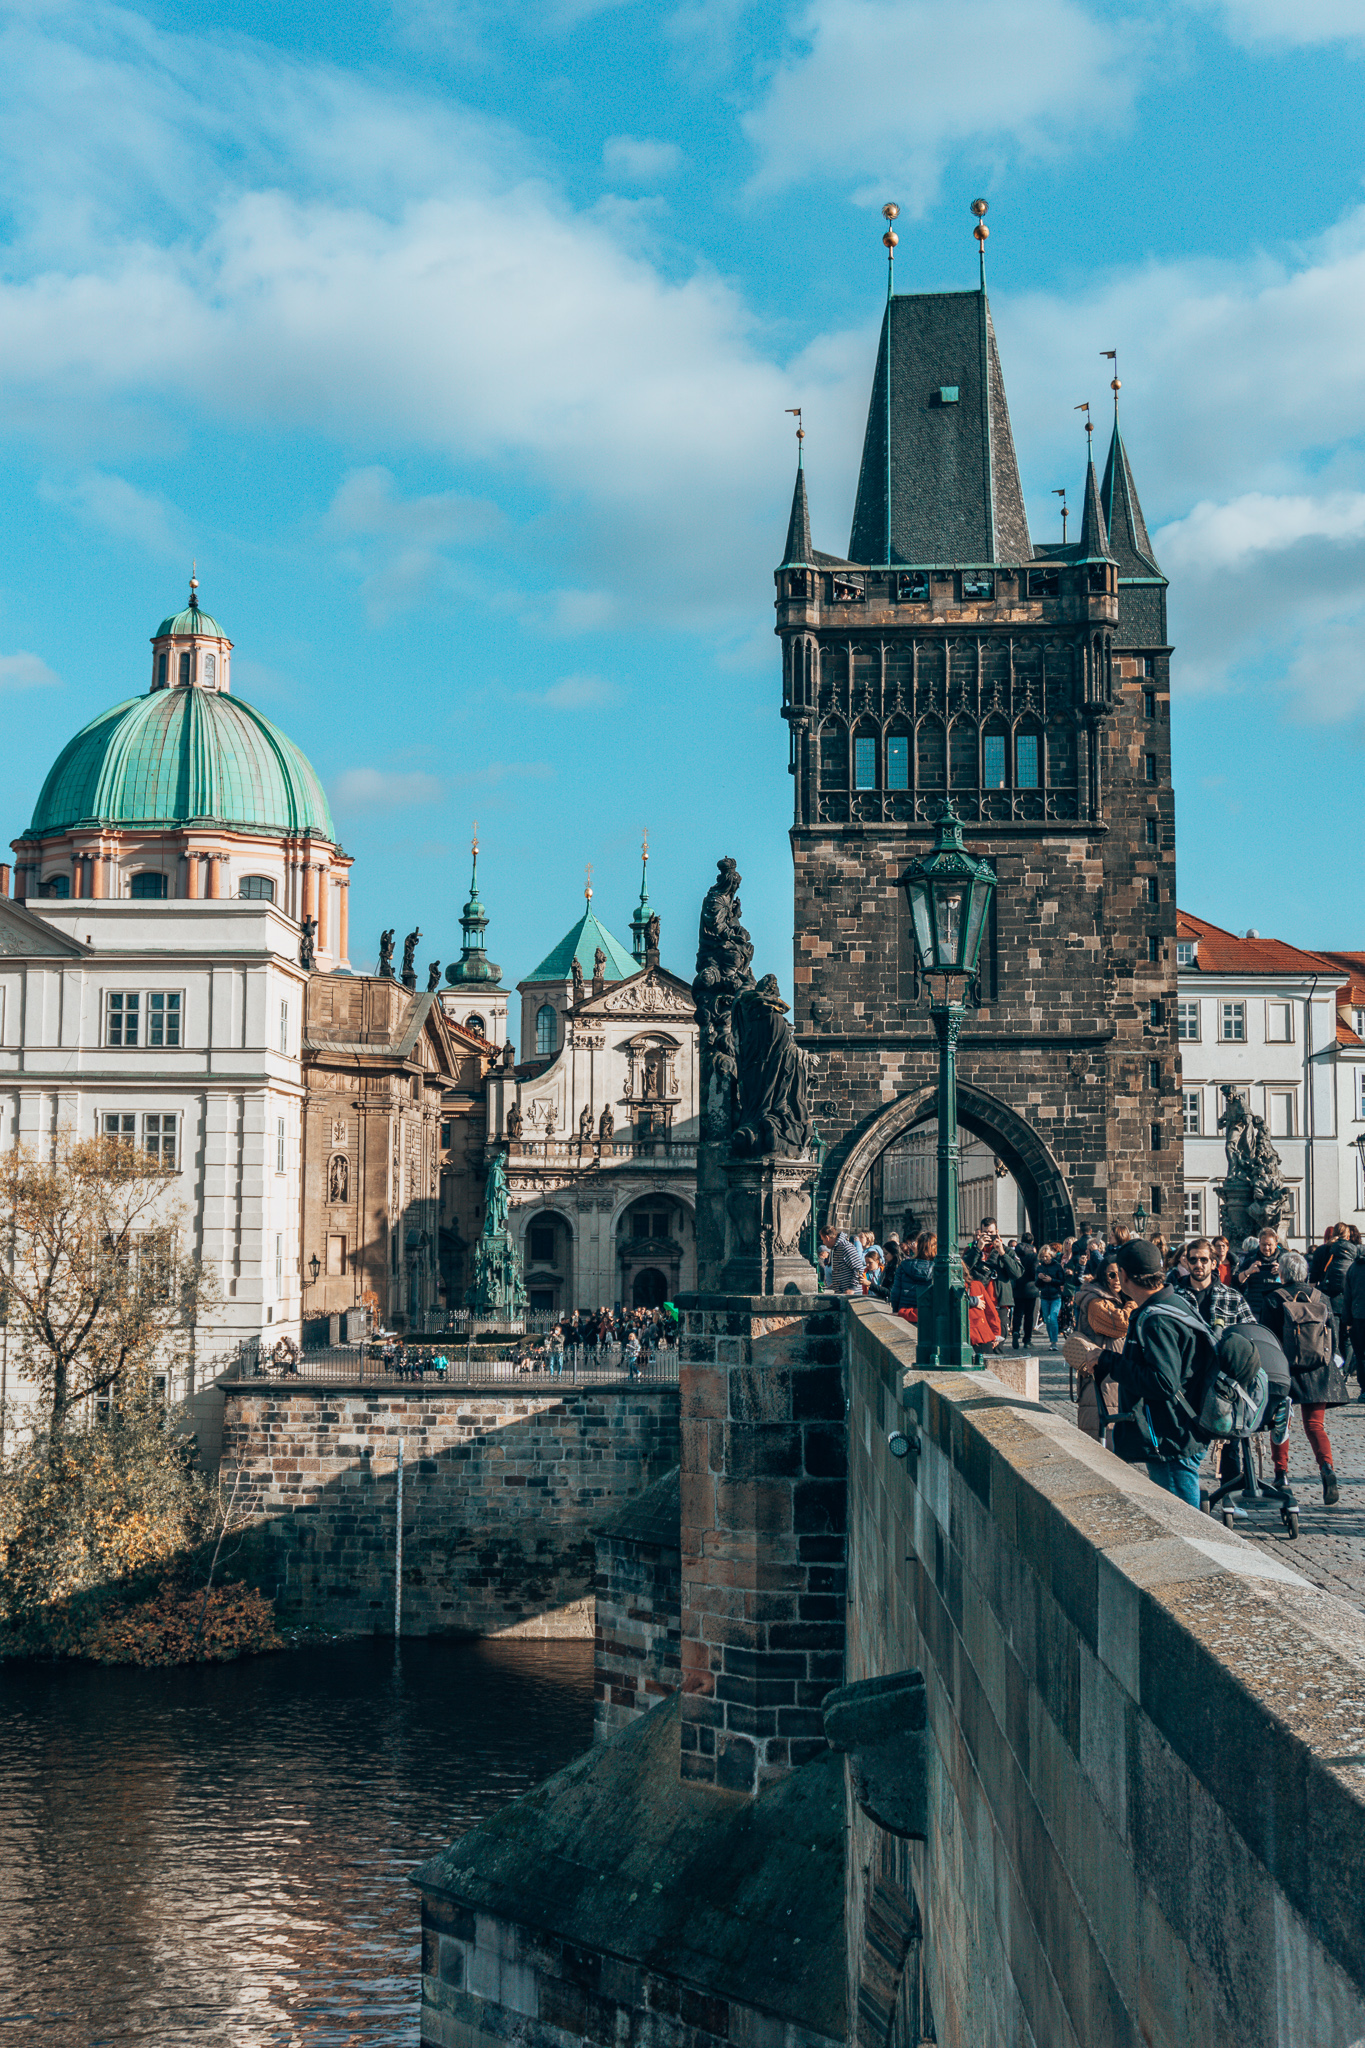 De meest bekende brug in Praag, de Karelsbrug